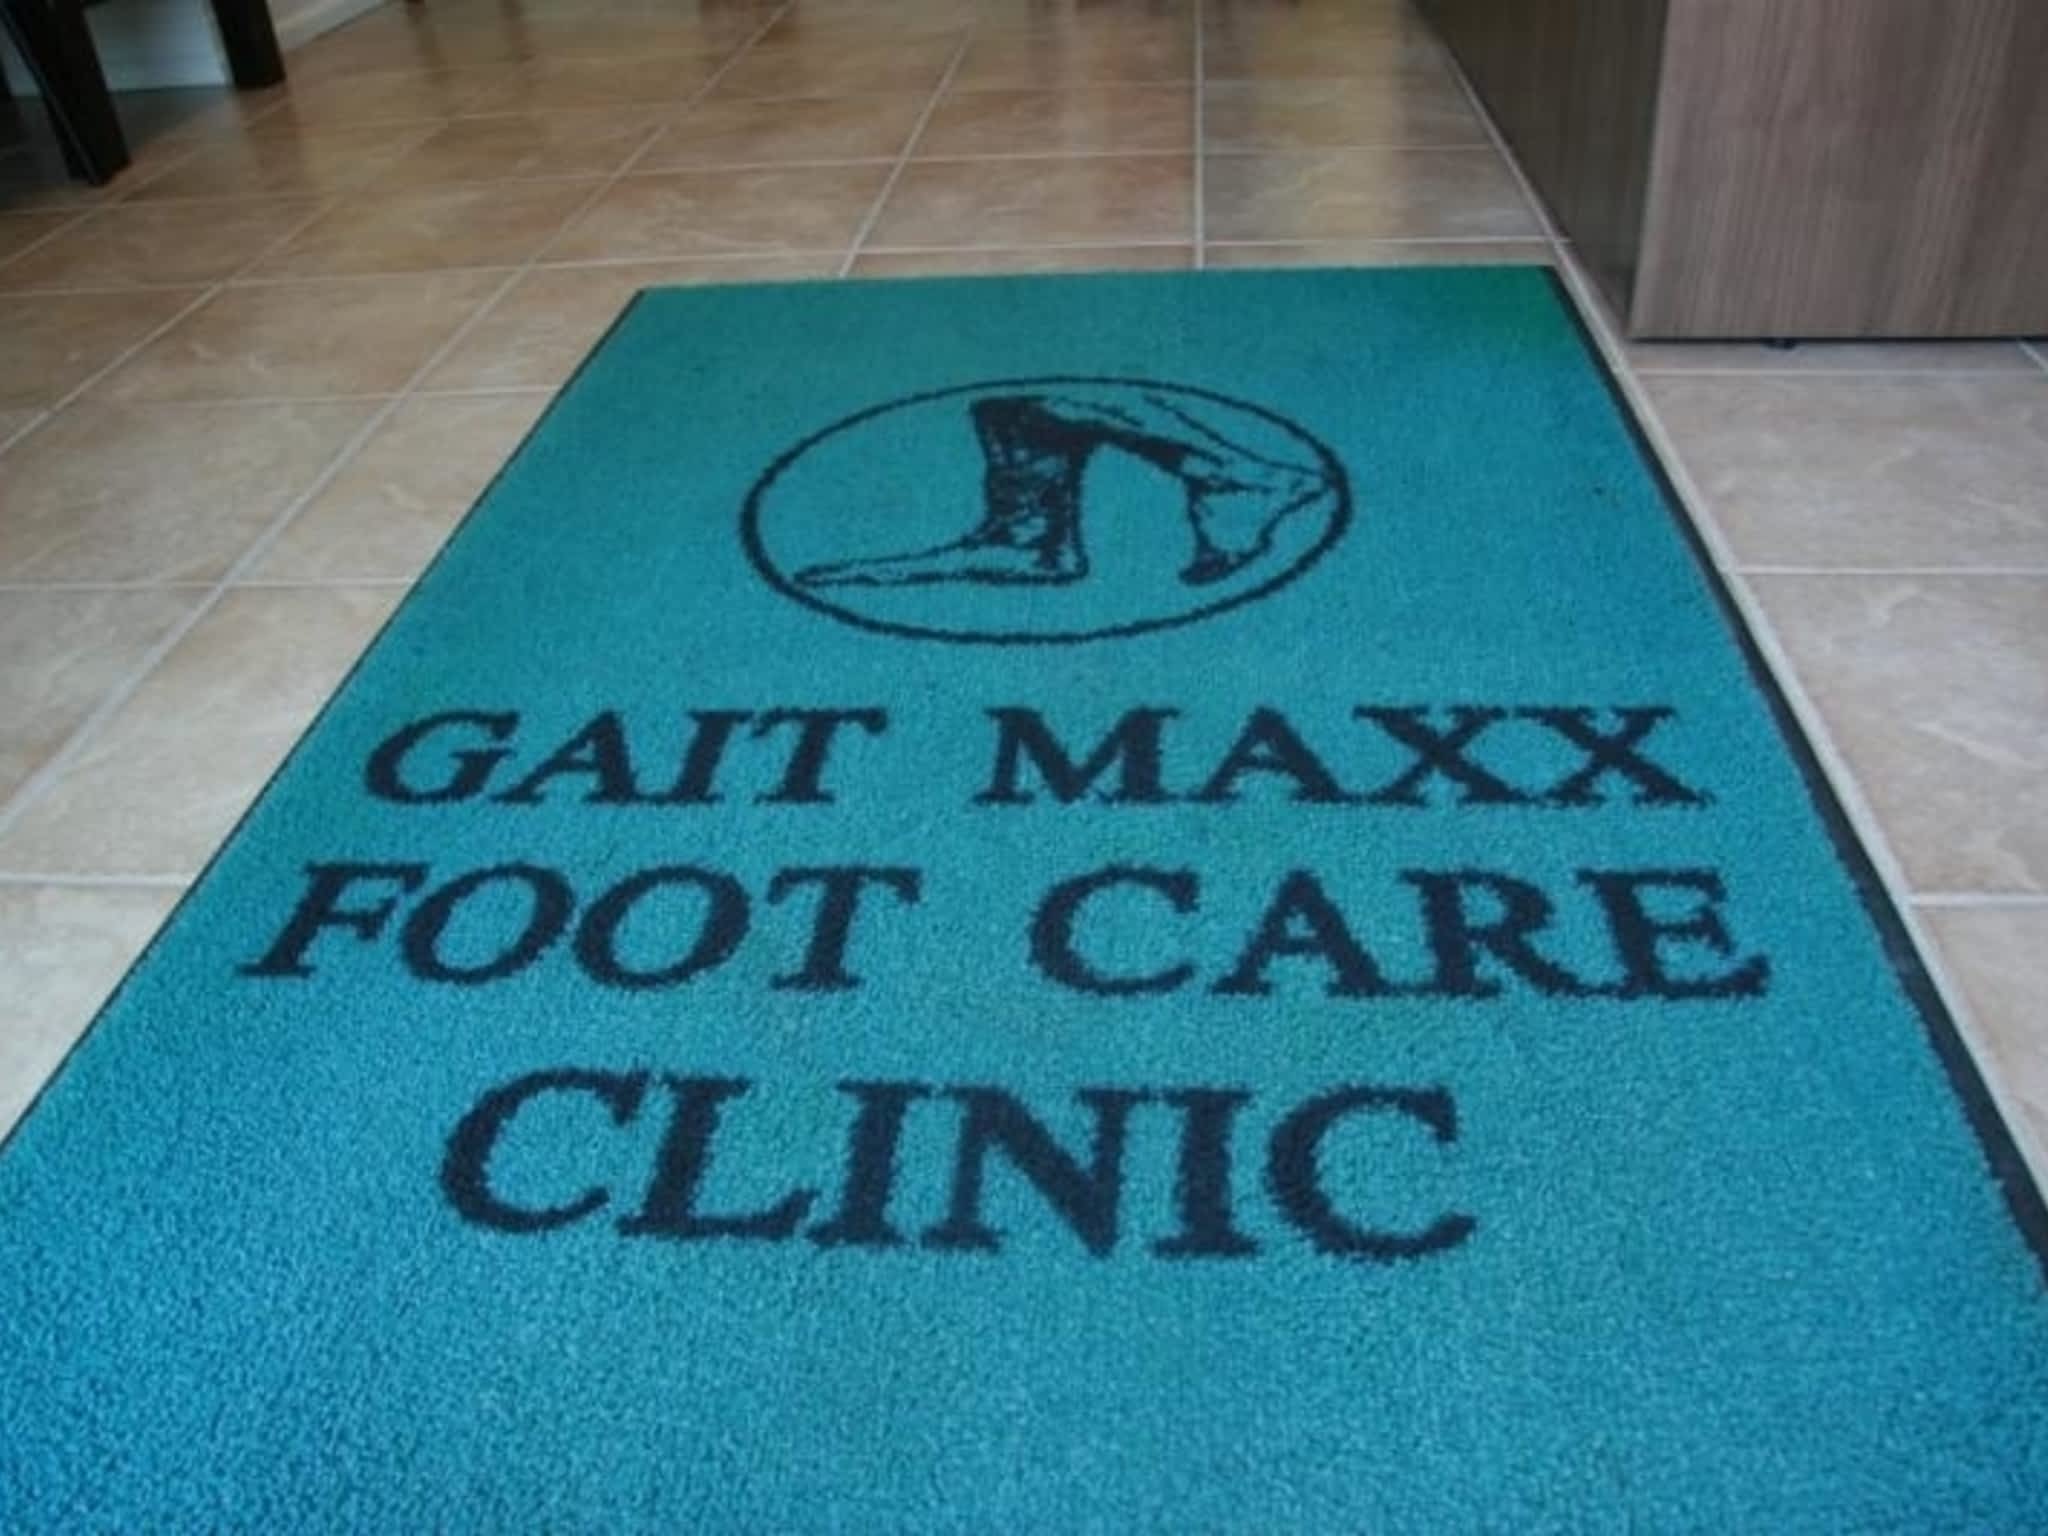 photo Gait Maxx Foot Clinic & Casted Custom Made Foot Orthotics